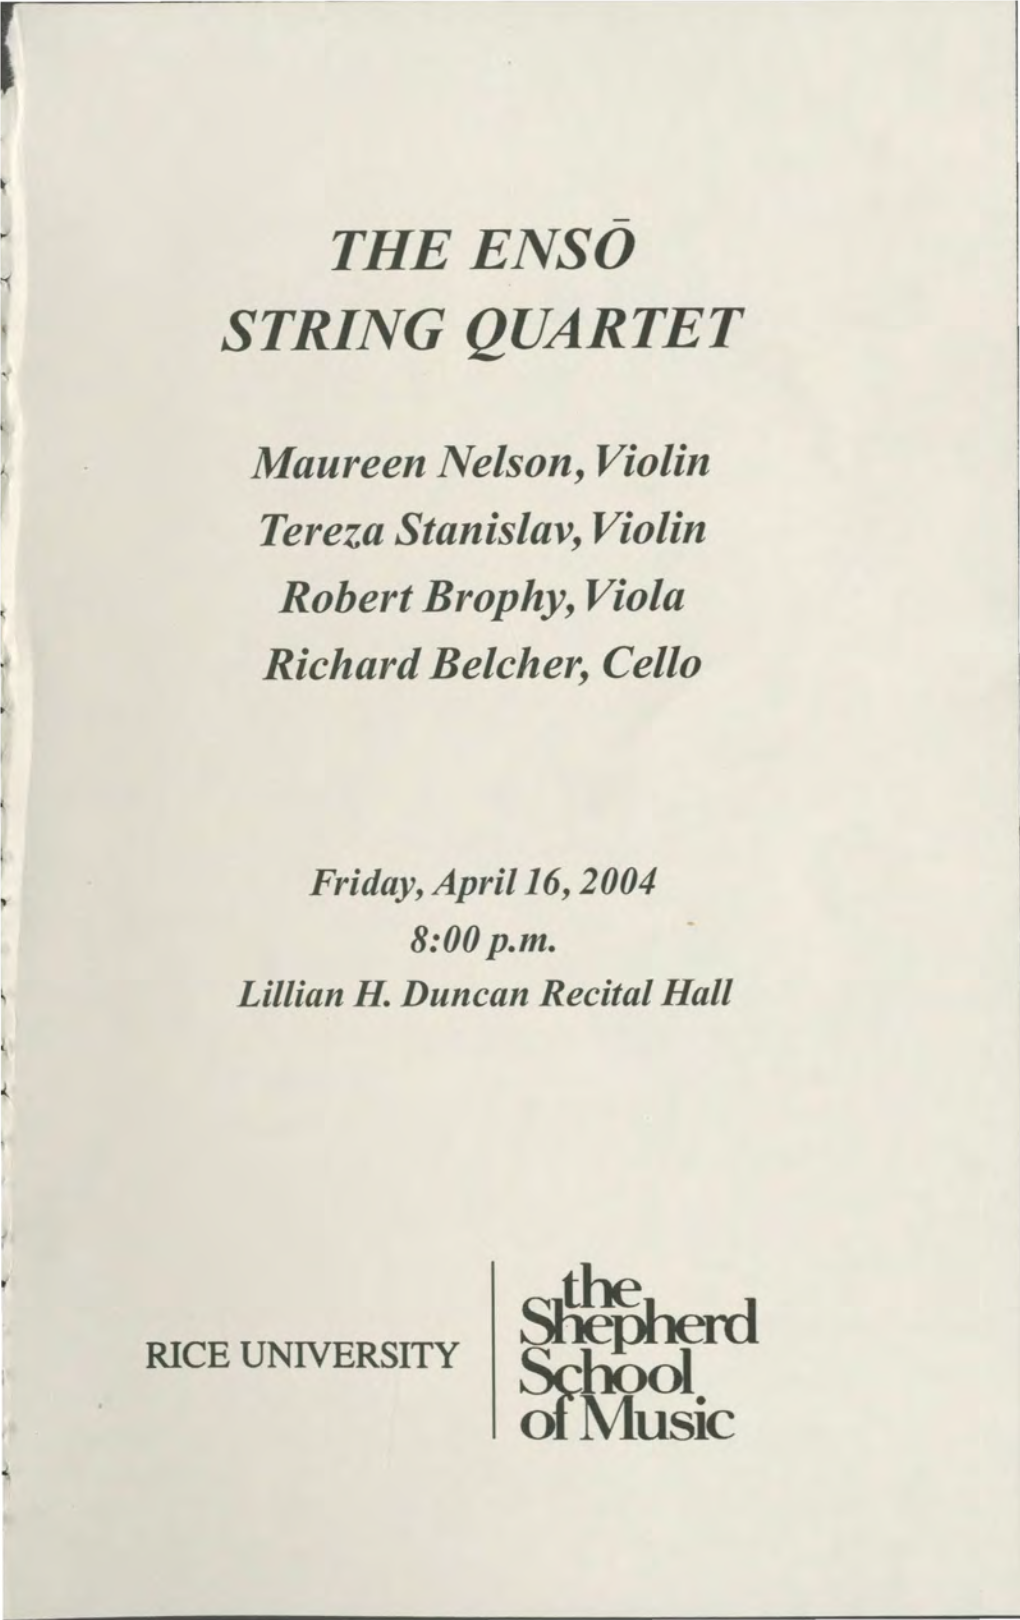 The Enso String Quartet